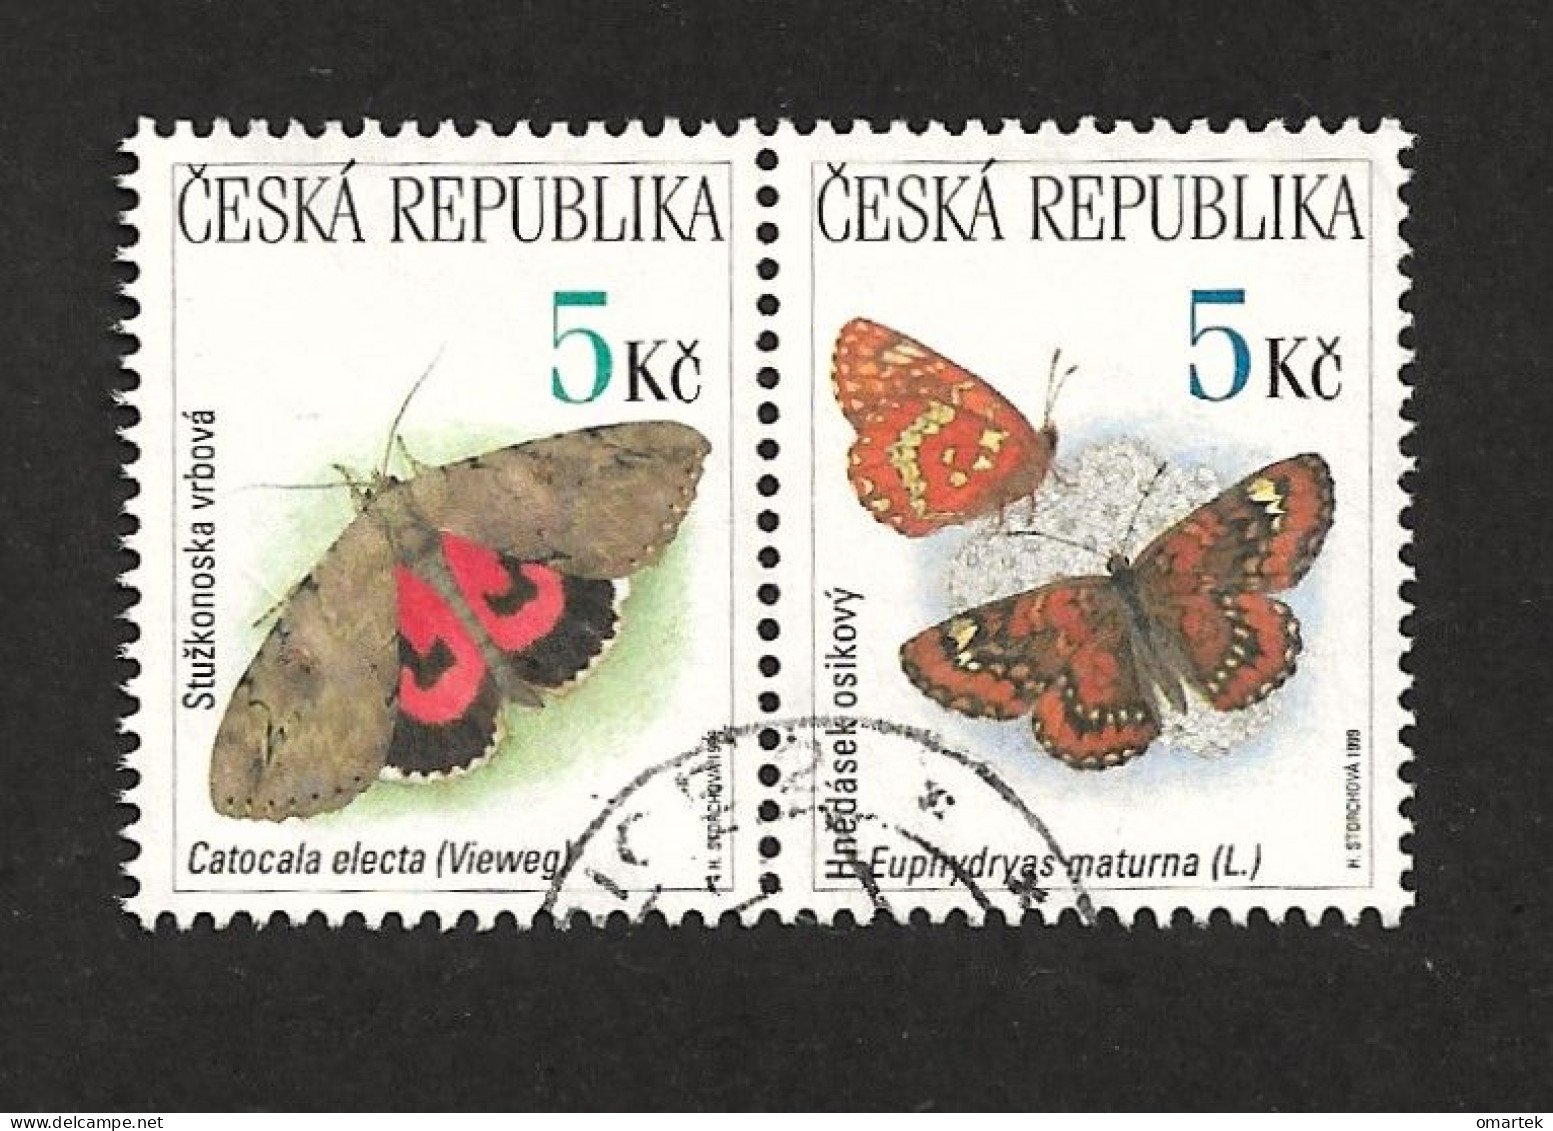 Czech Republic 1999 ⊙ Mi 209, 210 Sc 3083, 3084 Butterflies, Schmetterling. Tschechische Republik - Used Stamps